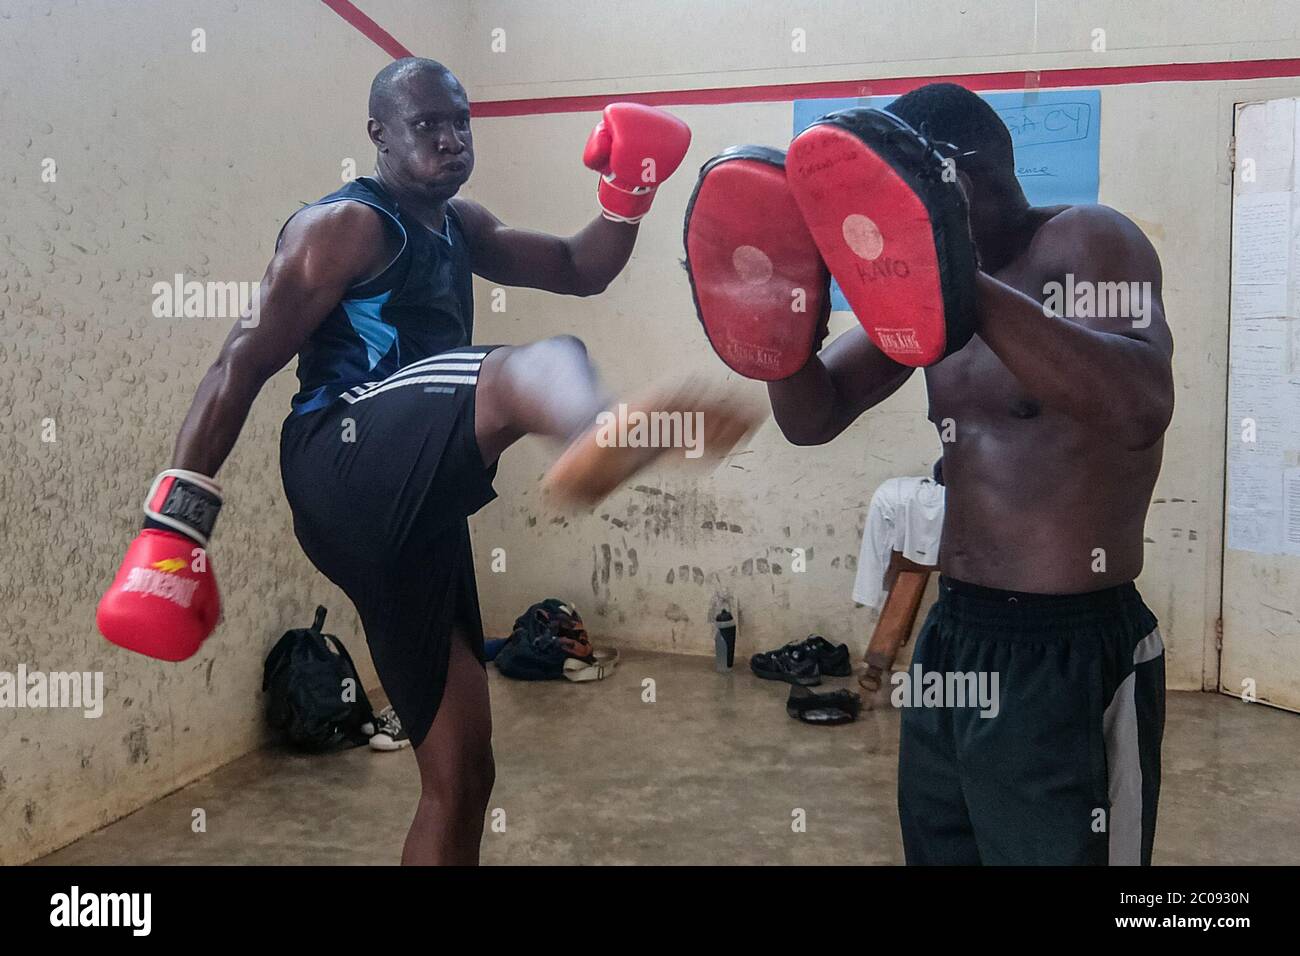 Hannington Mulumba practices kicks during a kick boxing training session with his coach, Kato Isaac, at Makerere University in Kampala, Uganda. (Edna Namara, GPJ Uganda) Stock Photo